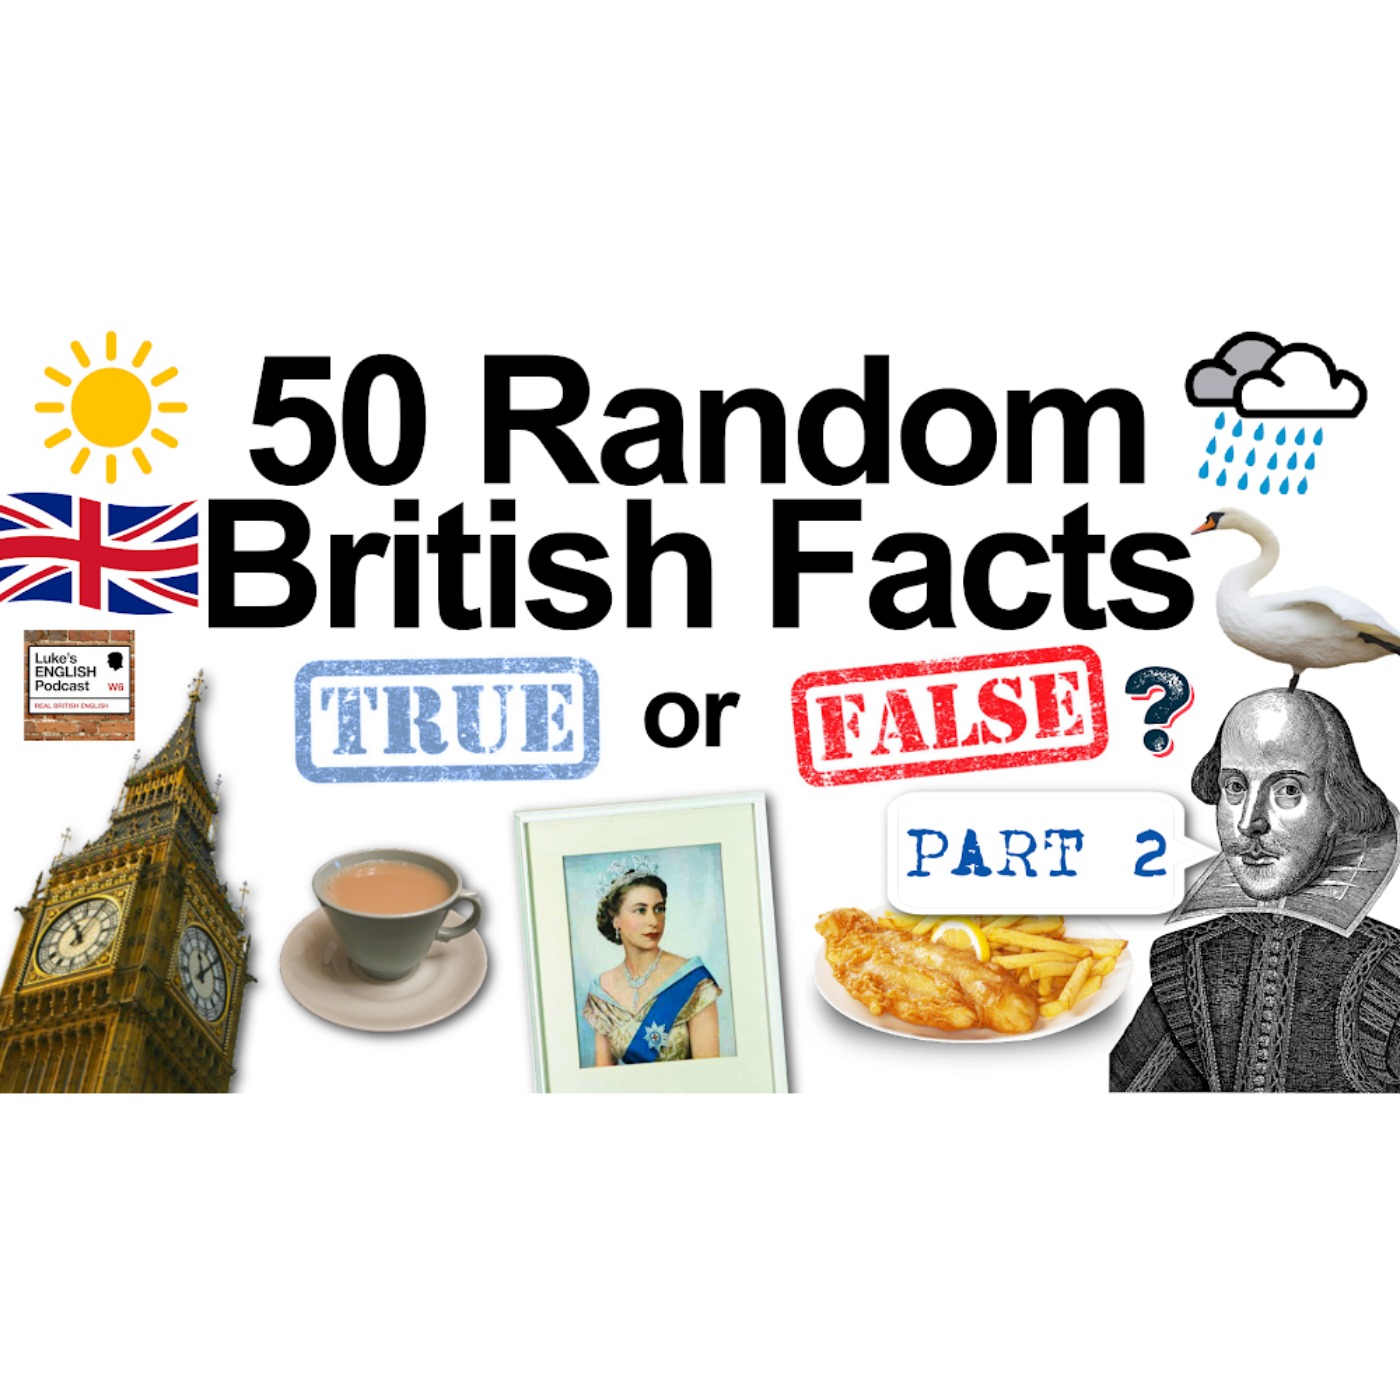 789. 50 Random British Facts (True or False Quiz) with James [Part 2]